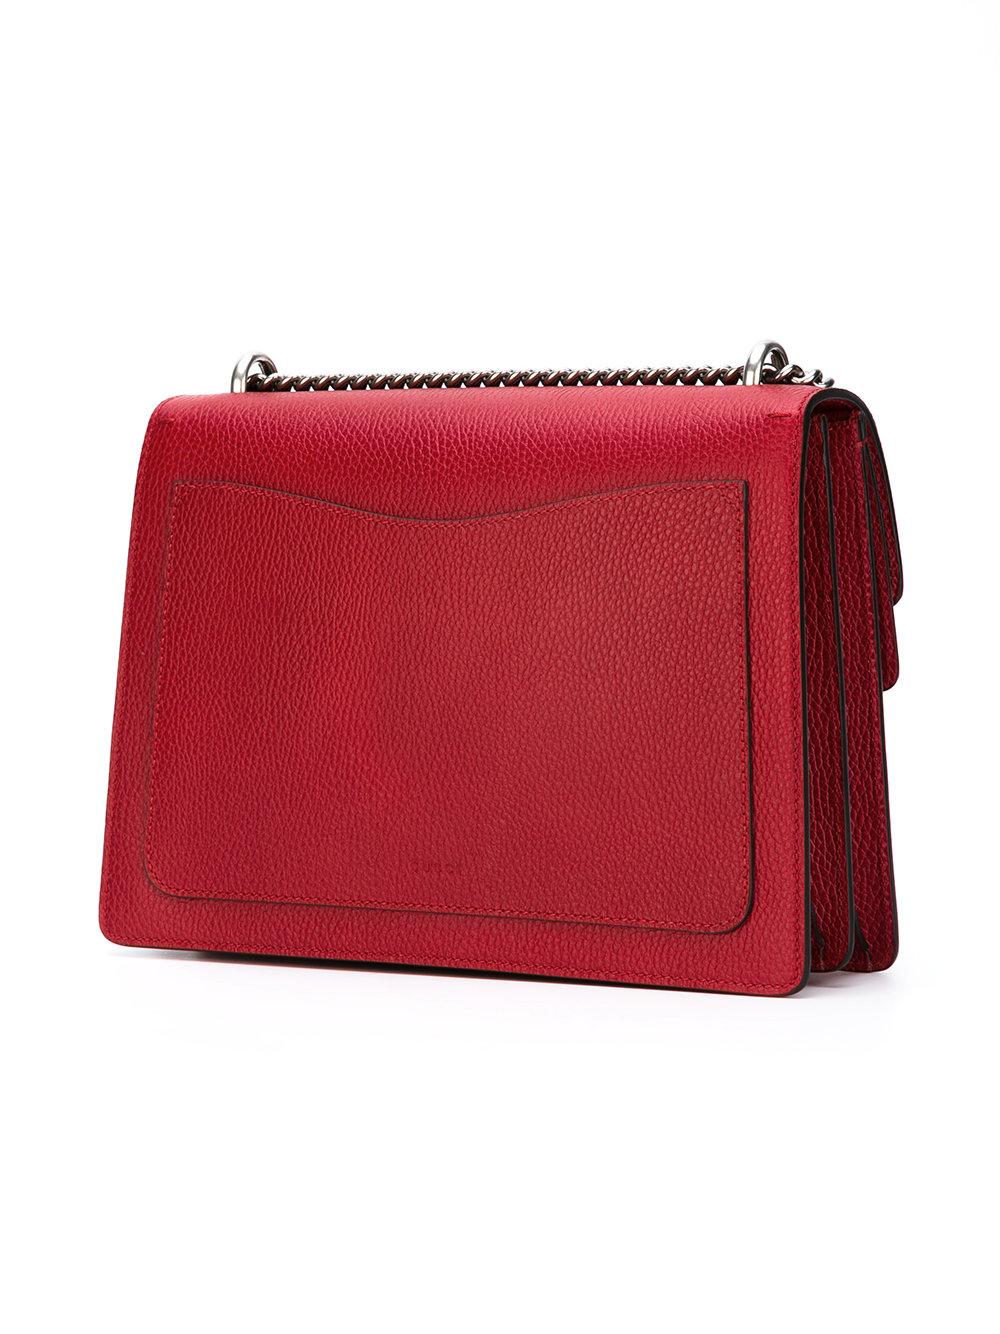 Lyst - Gucci Dionysus Shoulder Bag in Red